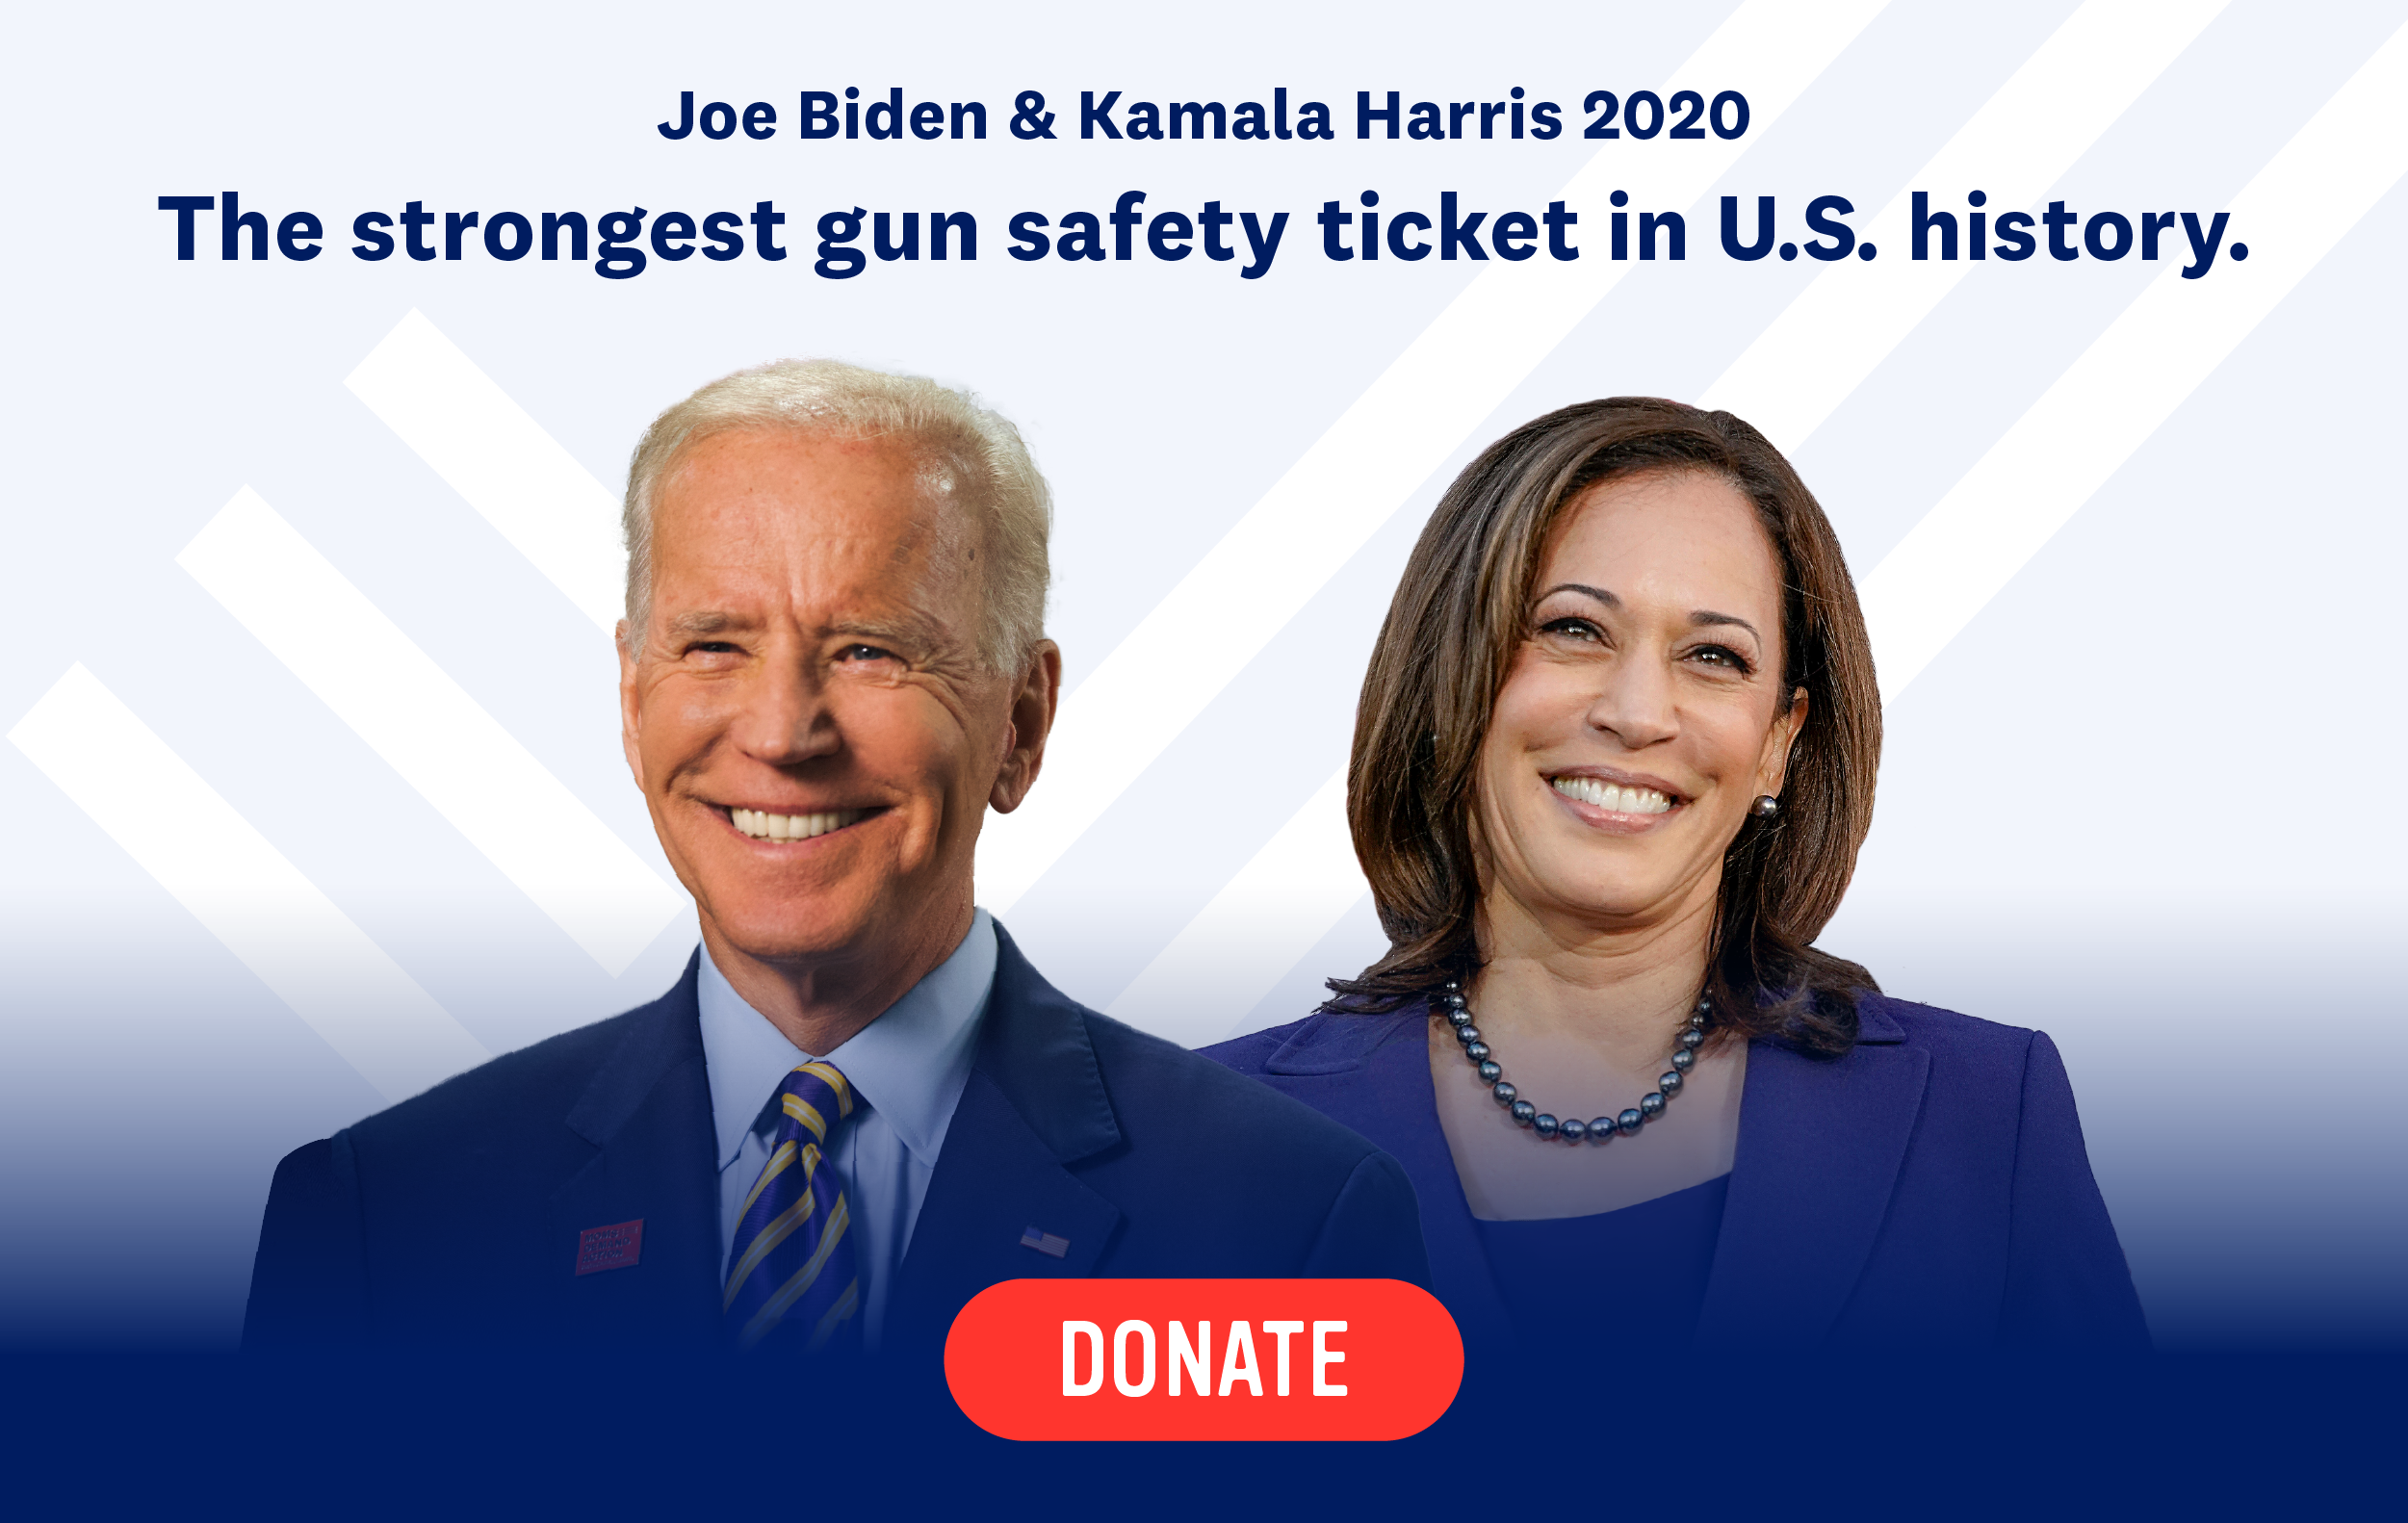 Joe Biden and Kamala Harris are the strongest gun safety ticket in U.S. history.